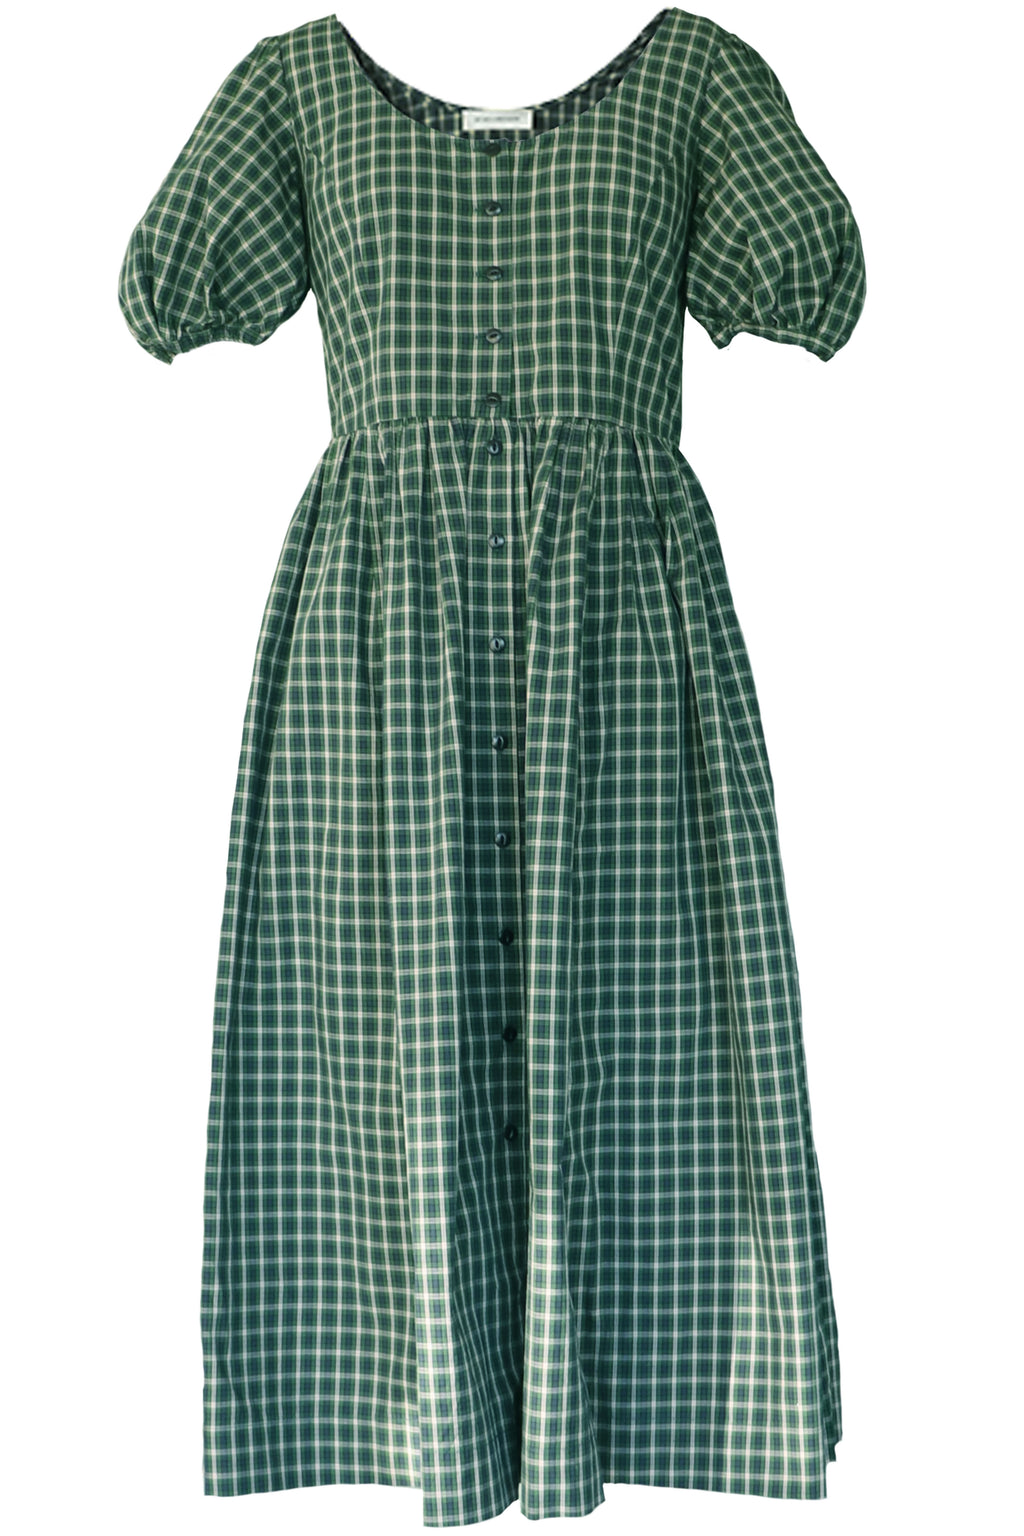 Maeve Dress in Haworth Plaid